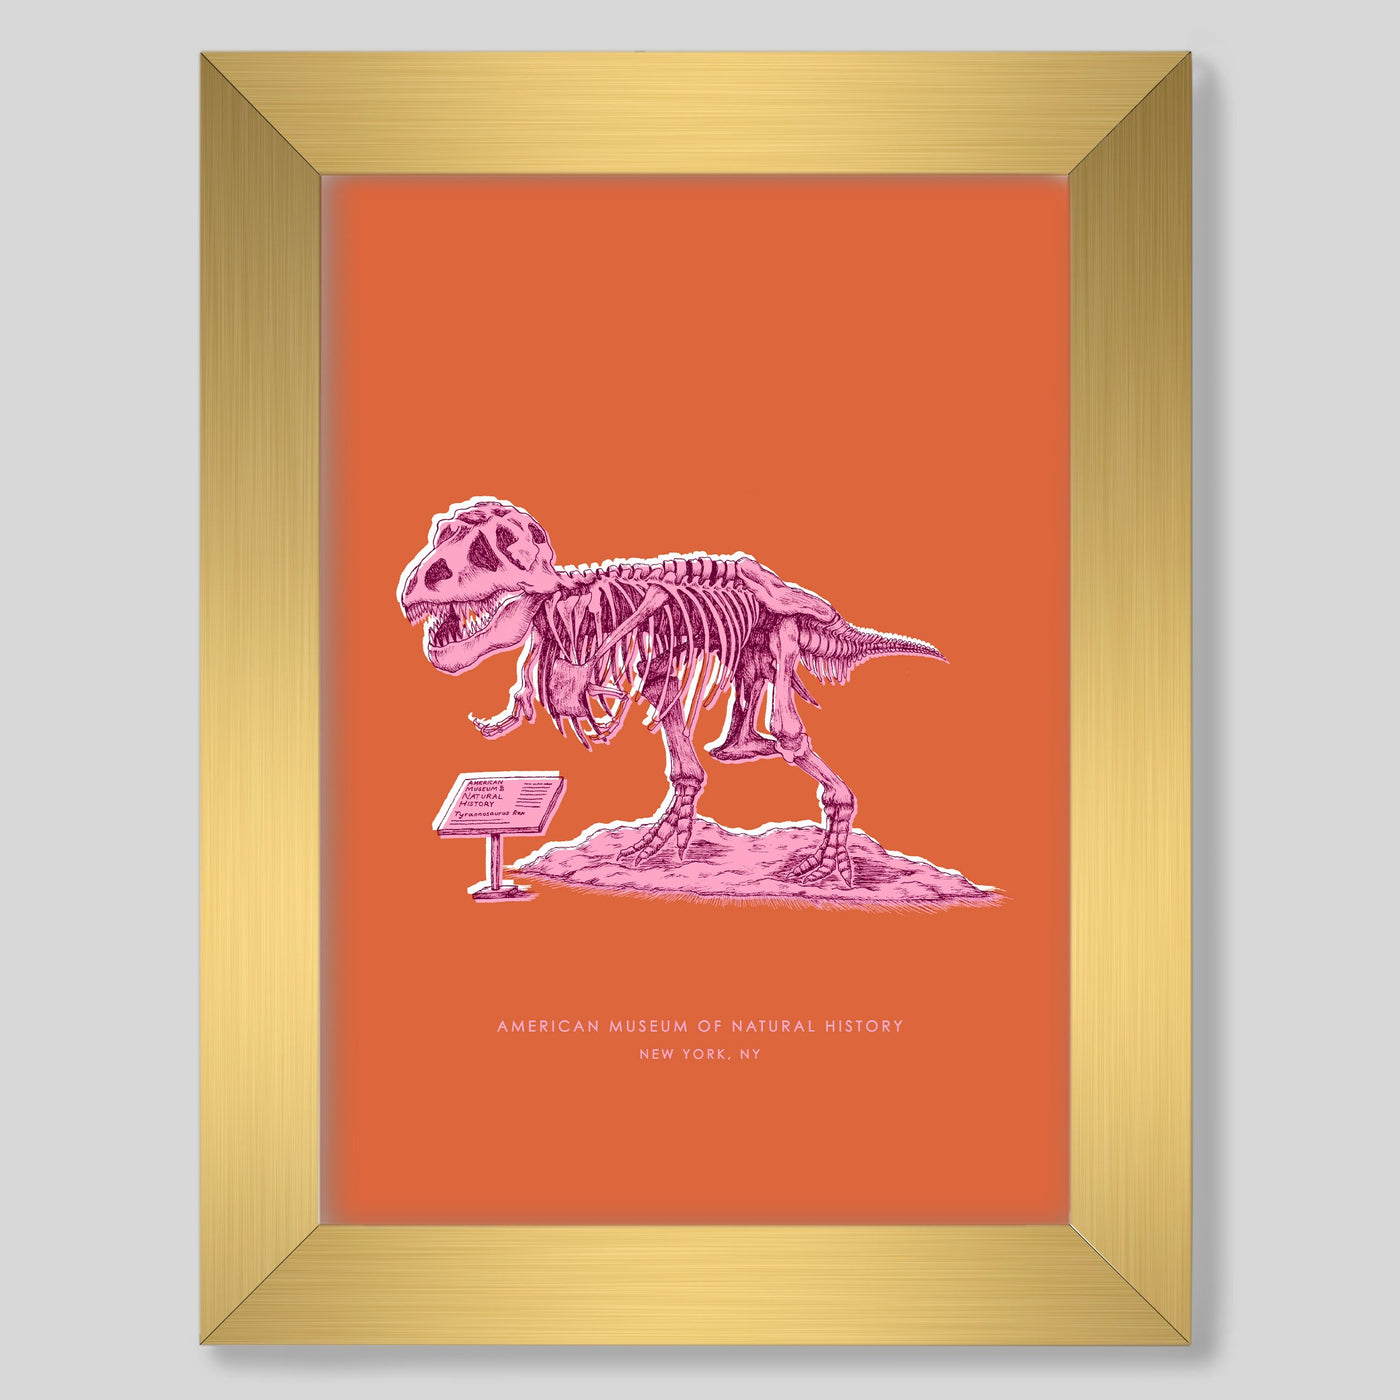 Gallery Prints Orange Print / 8x10 / Gold Frame New York Dinosaur Print Katie Kime